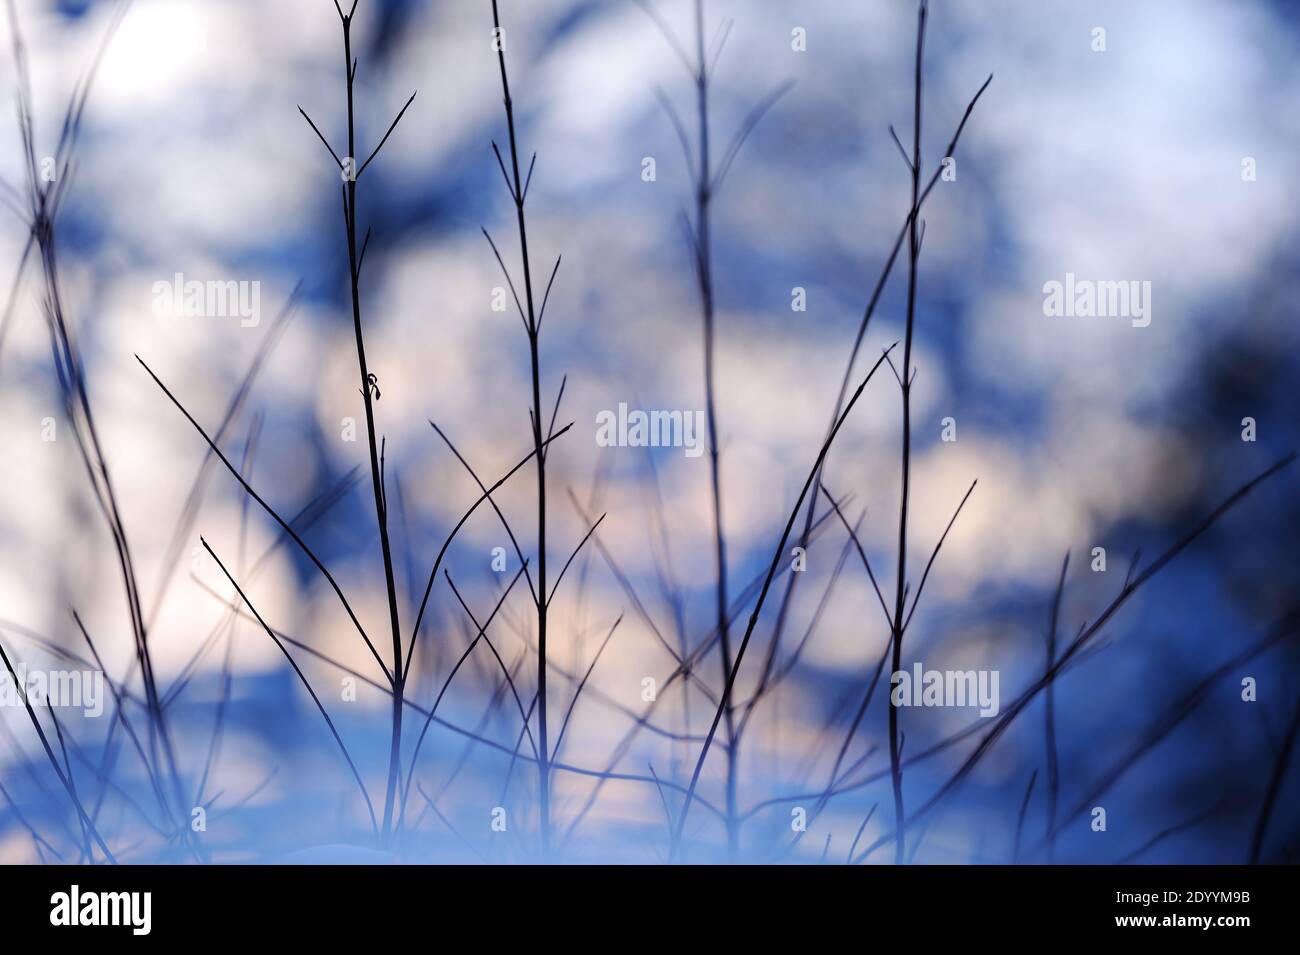 Siberian dogwood (Cornus alba 'Sibirica') branches in snow. Selective focus and shallow depth of field. Stock Photo